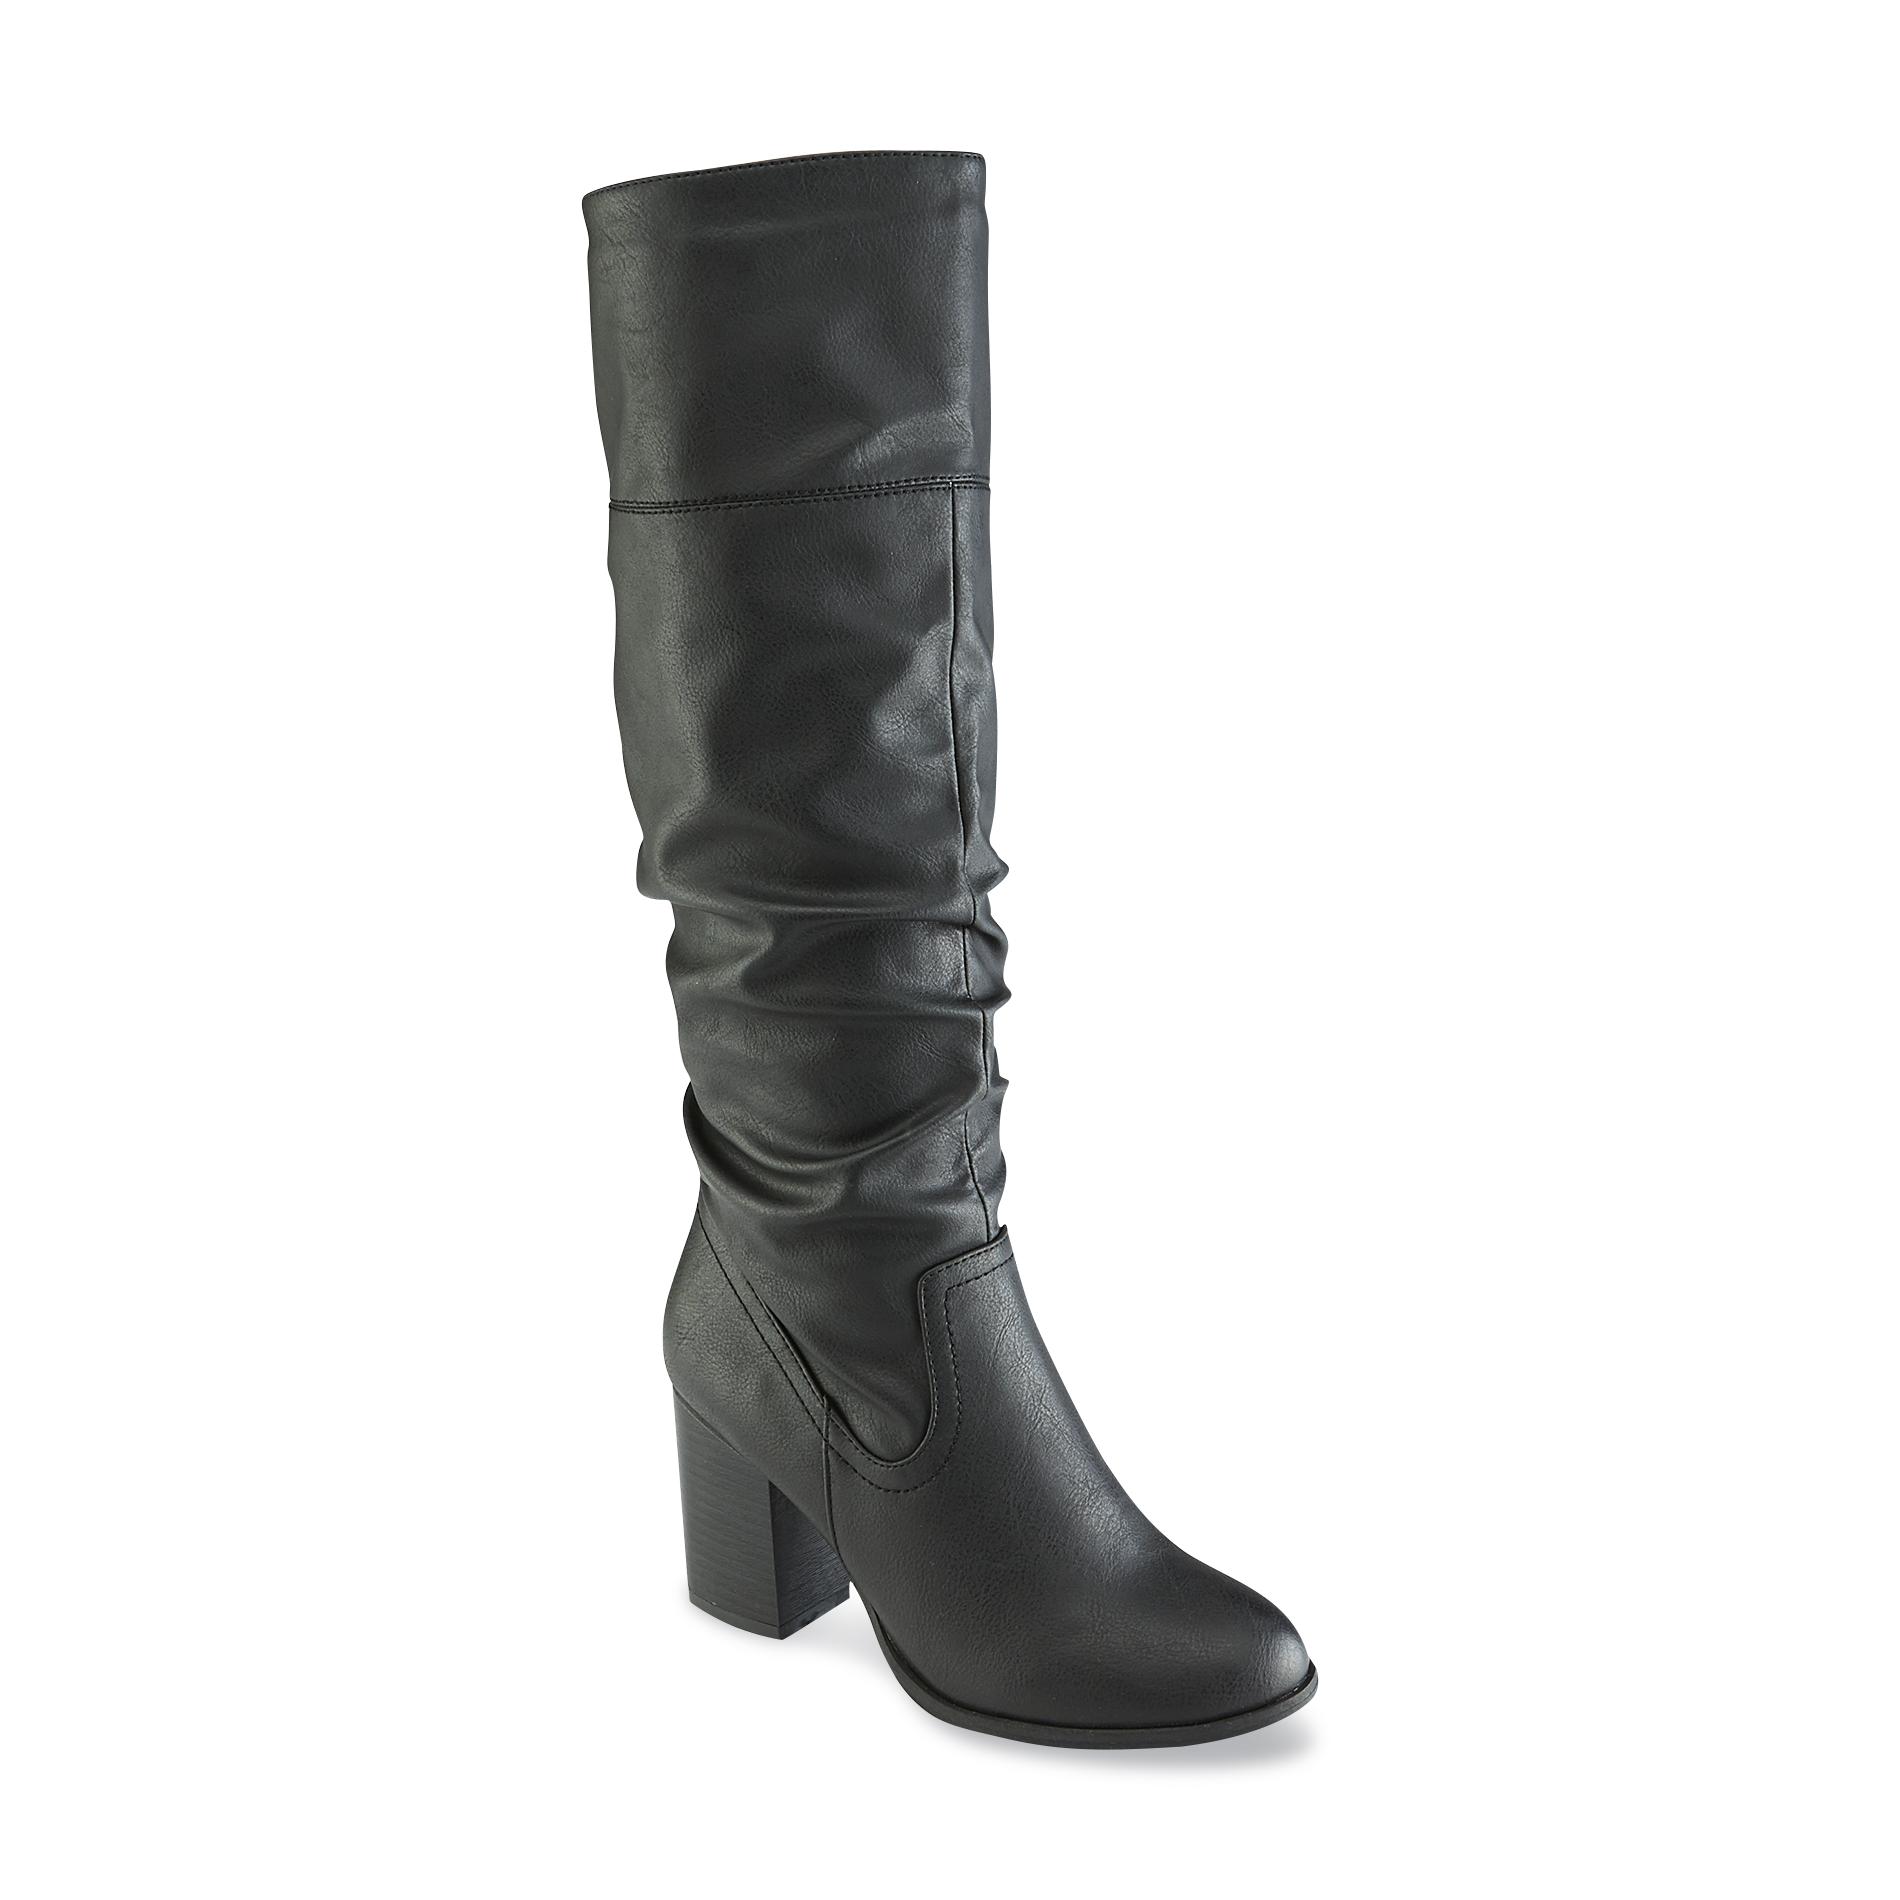 Attention Women's Adler Black Fashion Boot